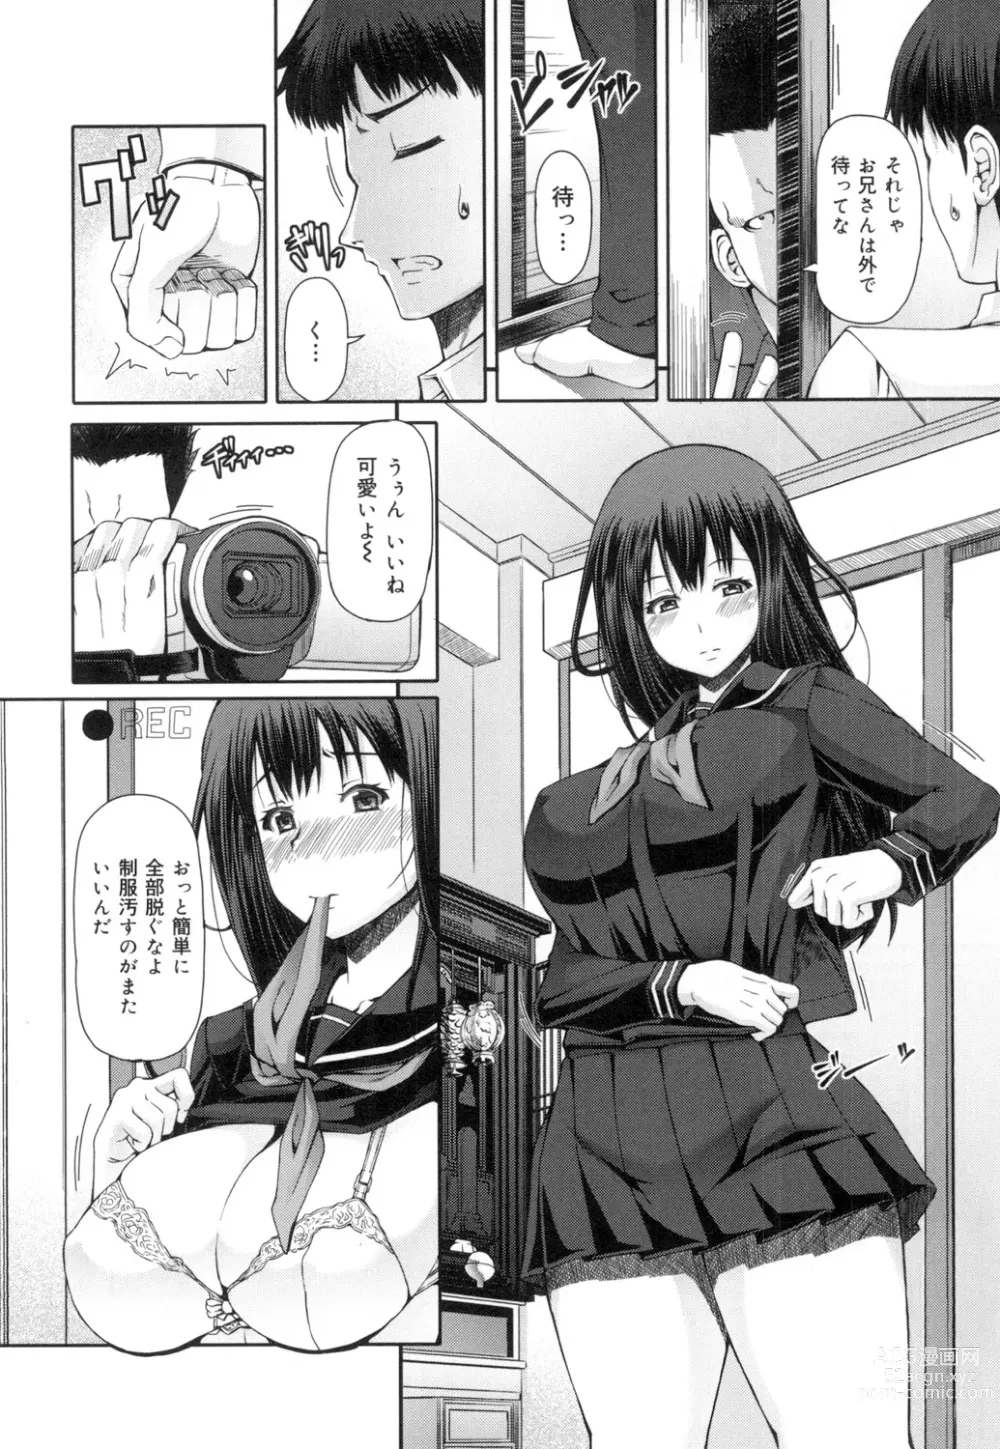 Page 237 of manga Kagome no Inyoku - After School Lady